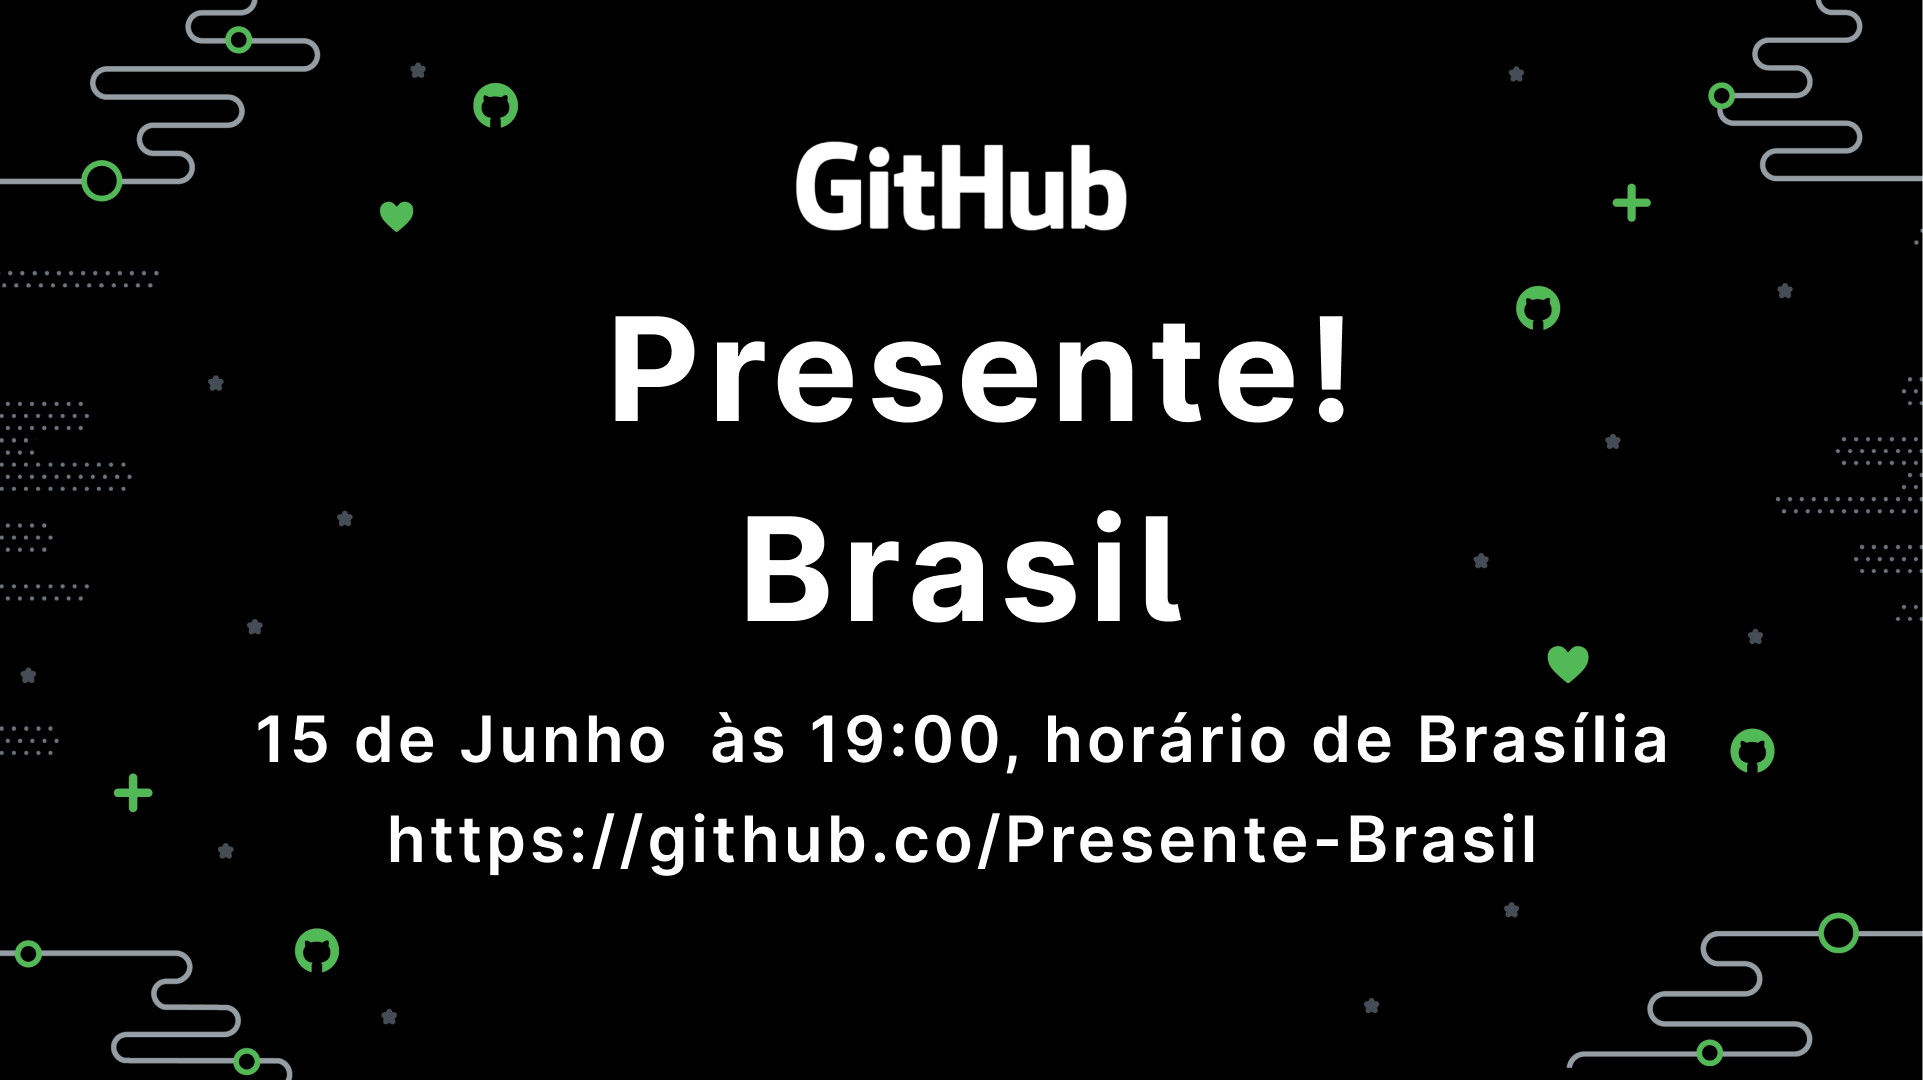 GitHub Presente: Em Portuguese